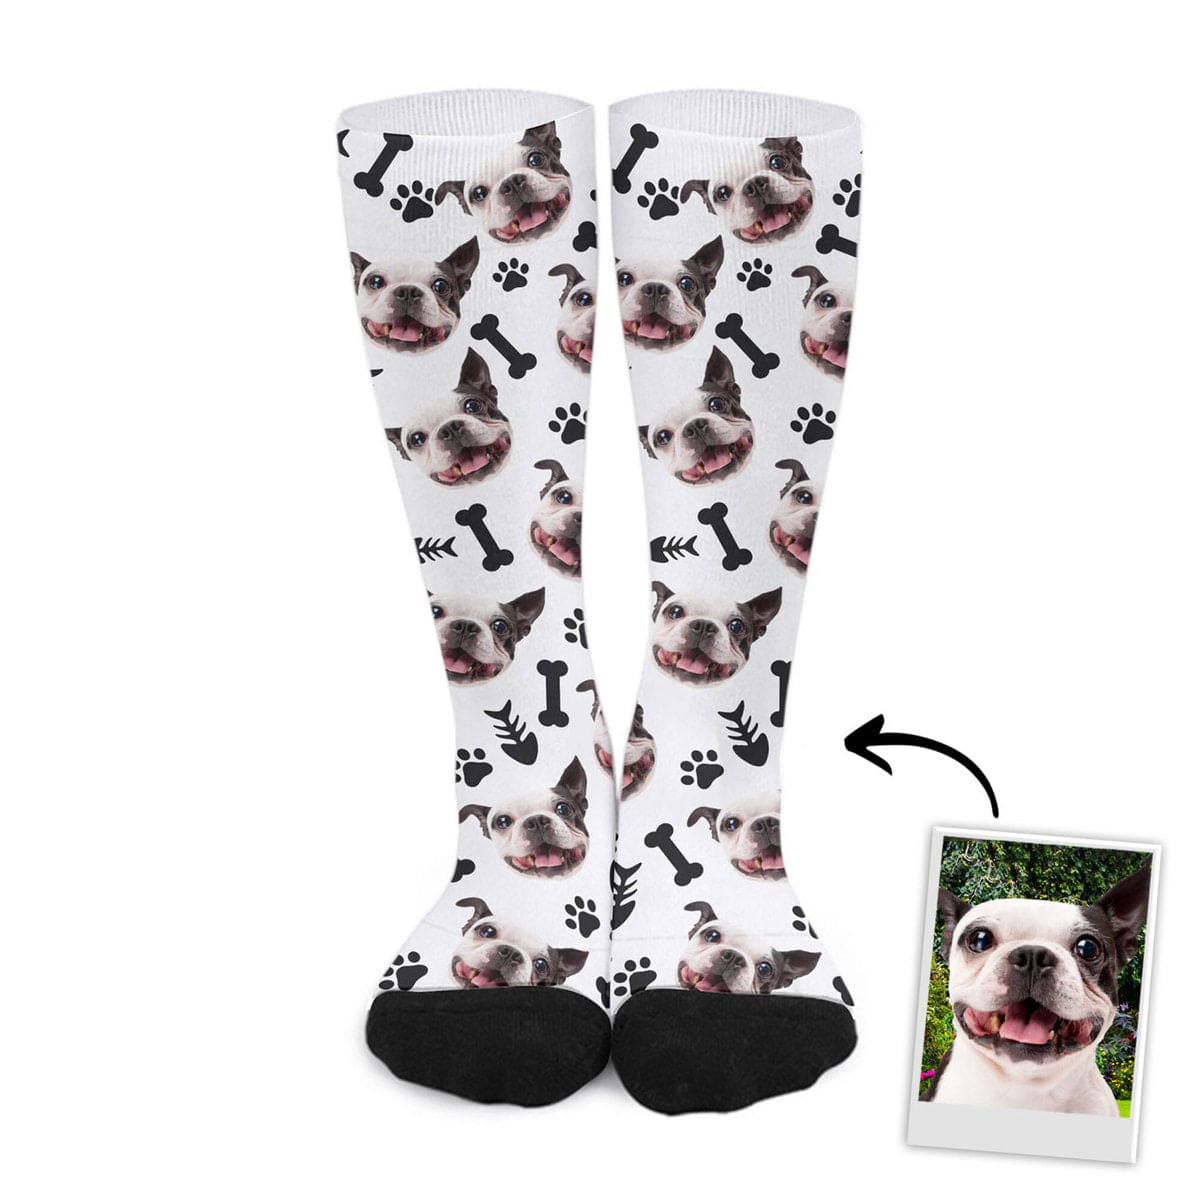 Custom Socks With Pet Face